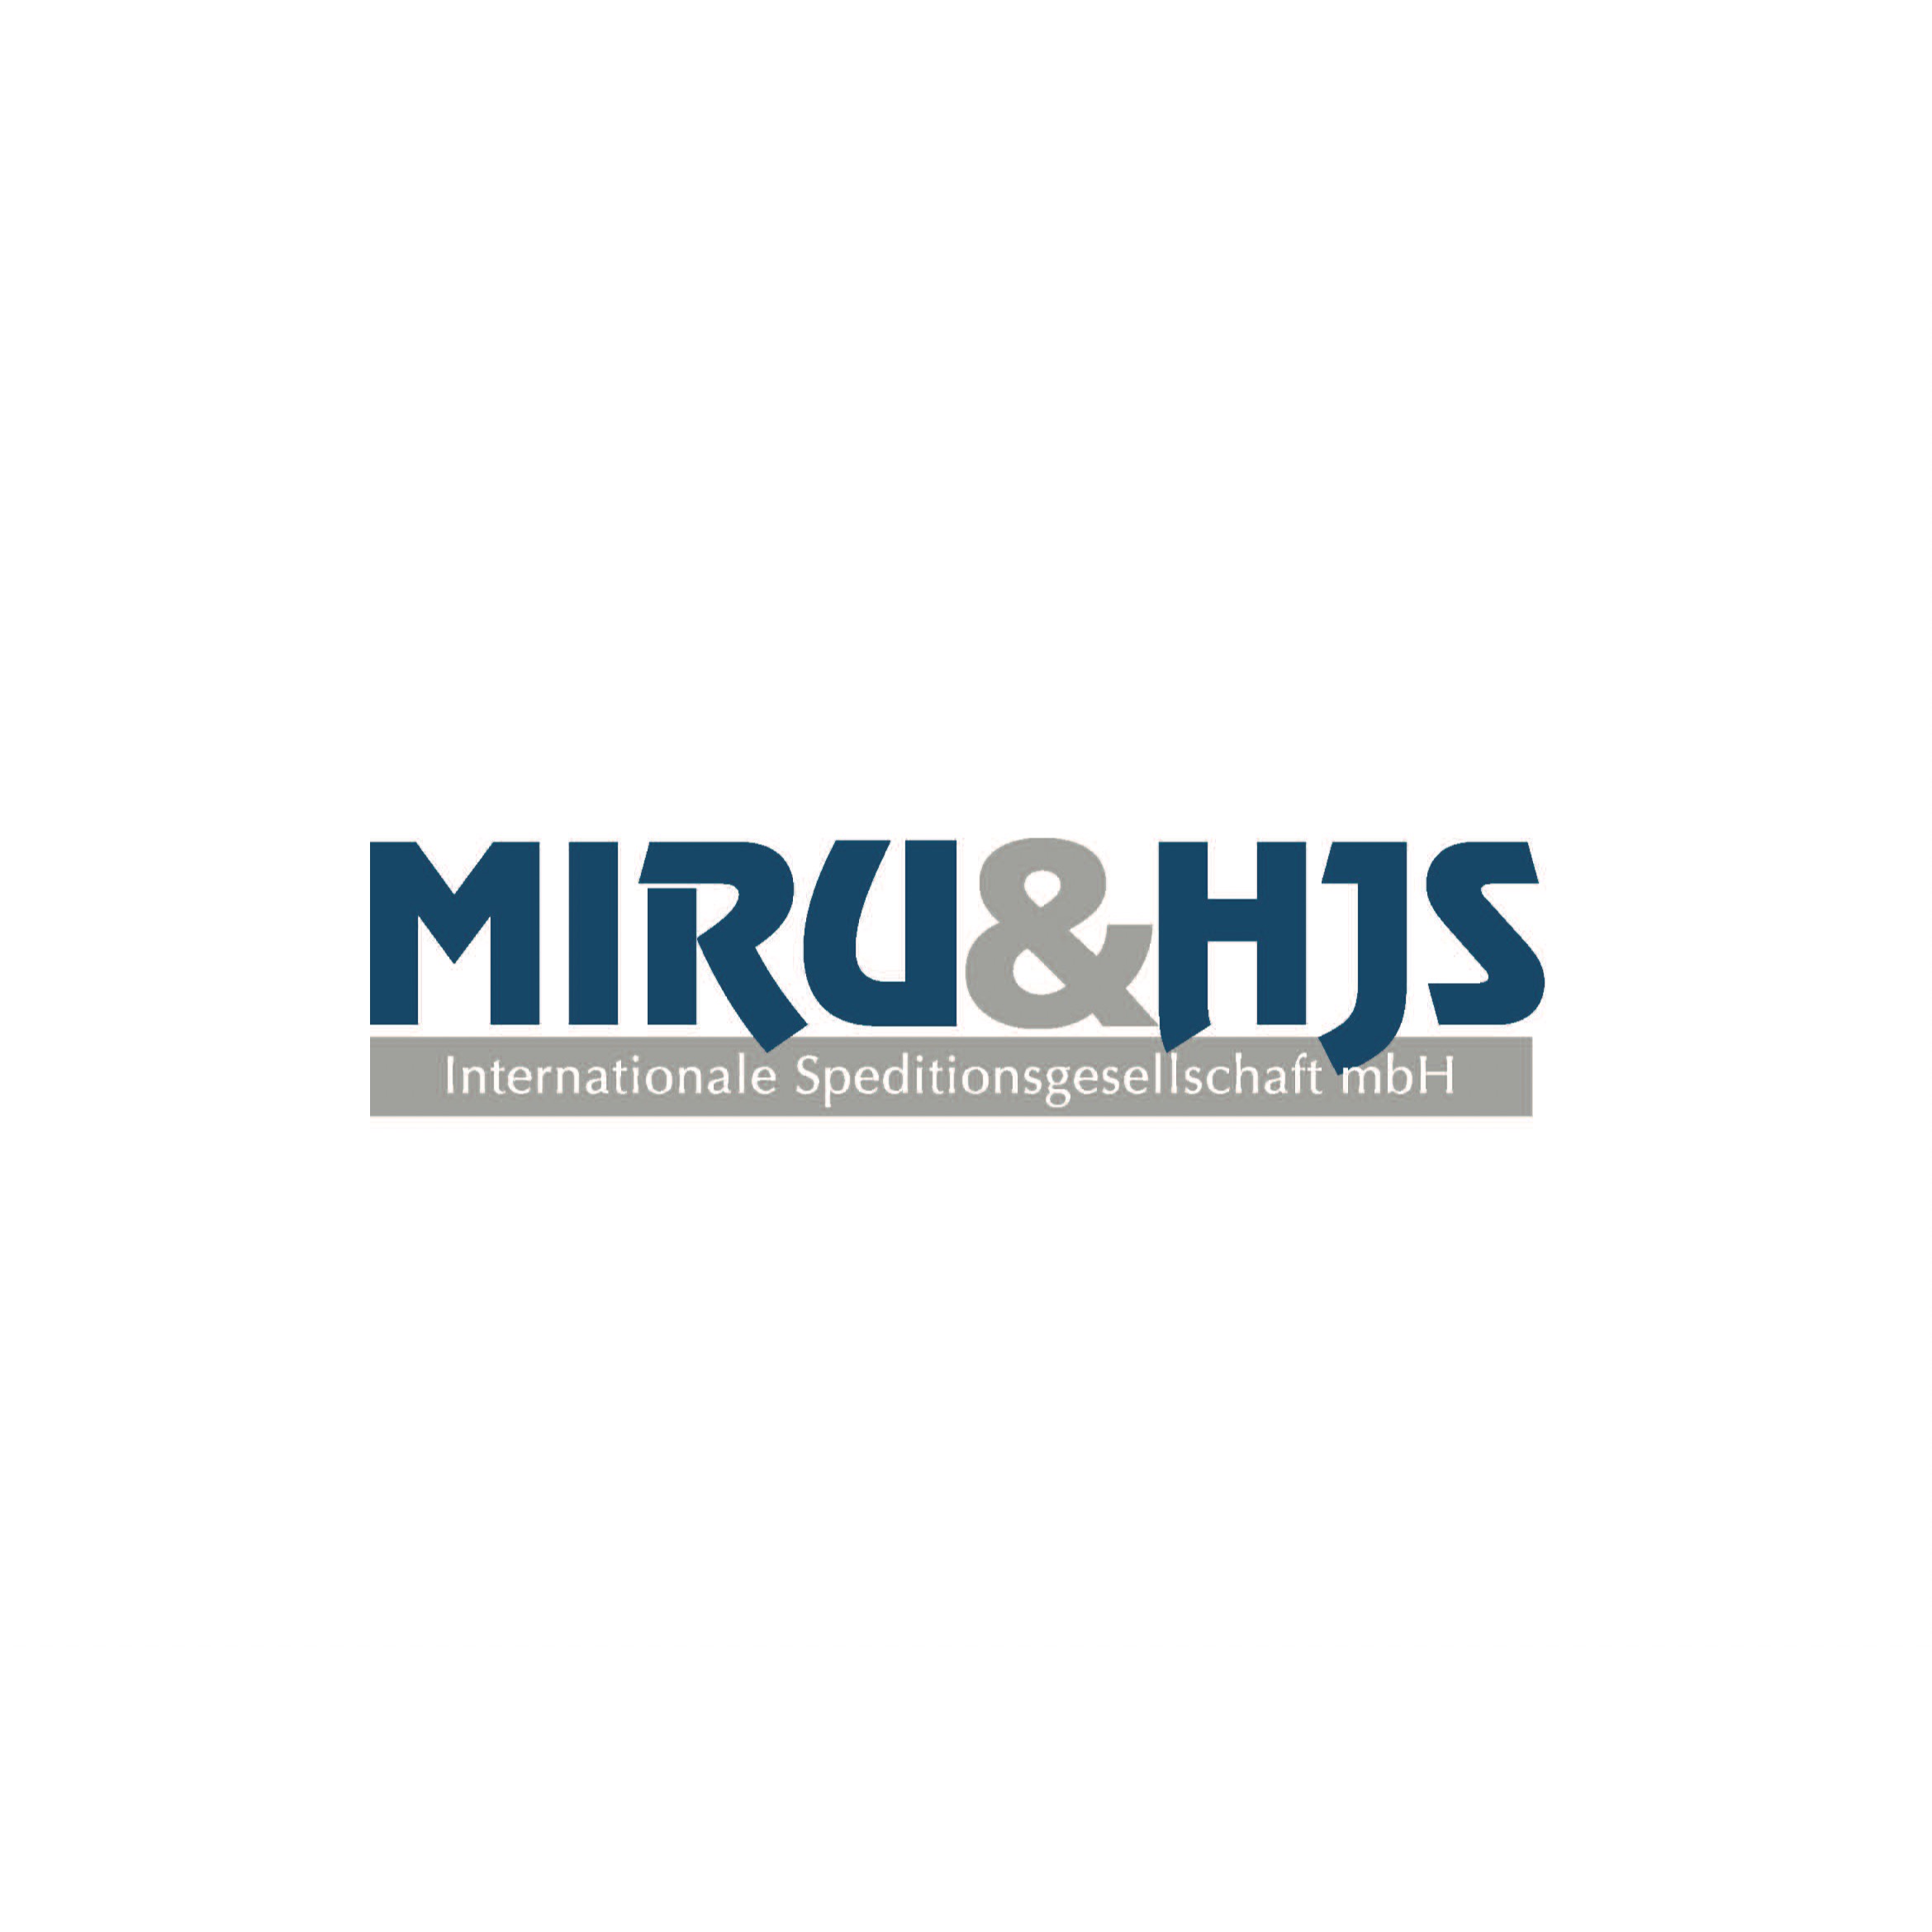 MIRU & HJS Speditionsgesellschaft mbH in Bremen - Logo